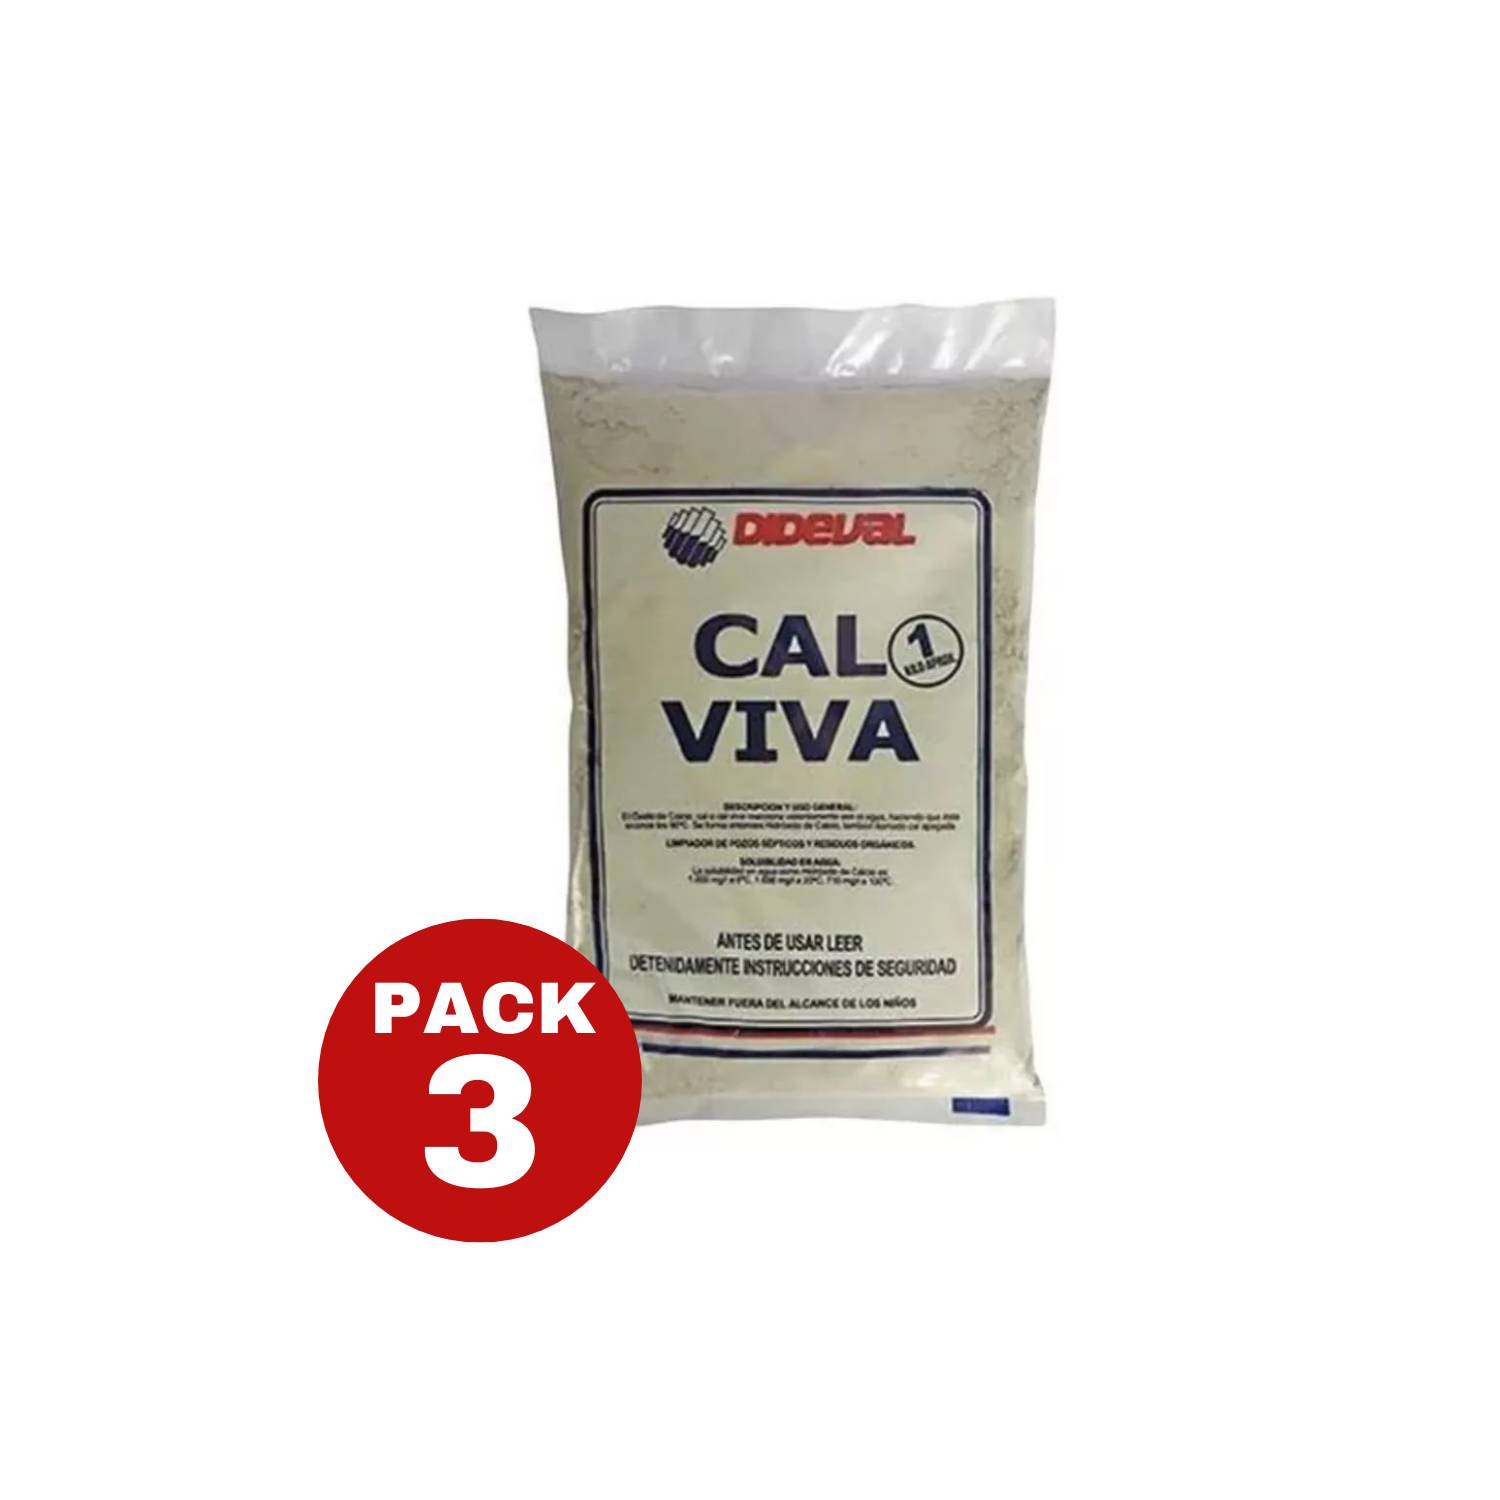 GENERICO Cal Viva Dideval1kg Pack 3 Unidades